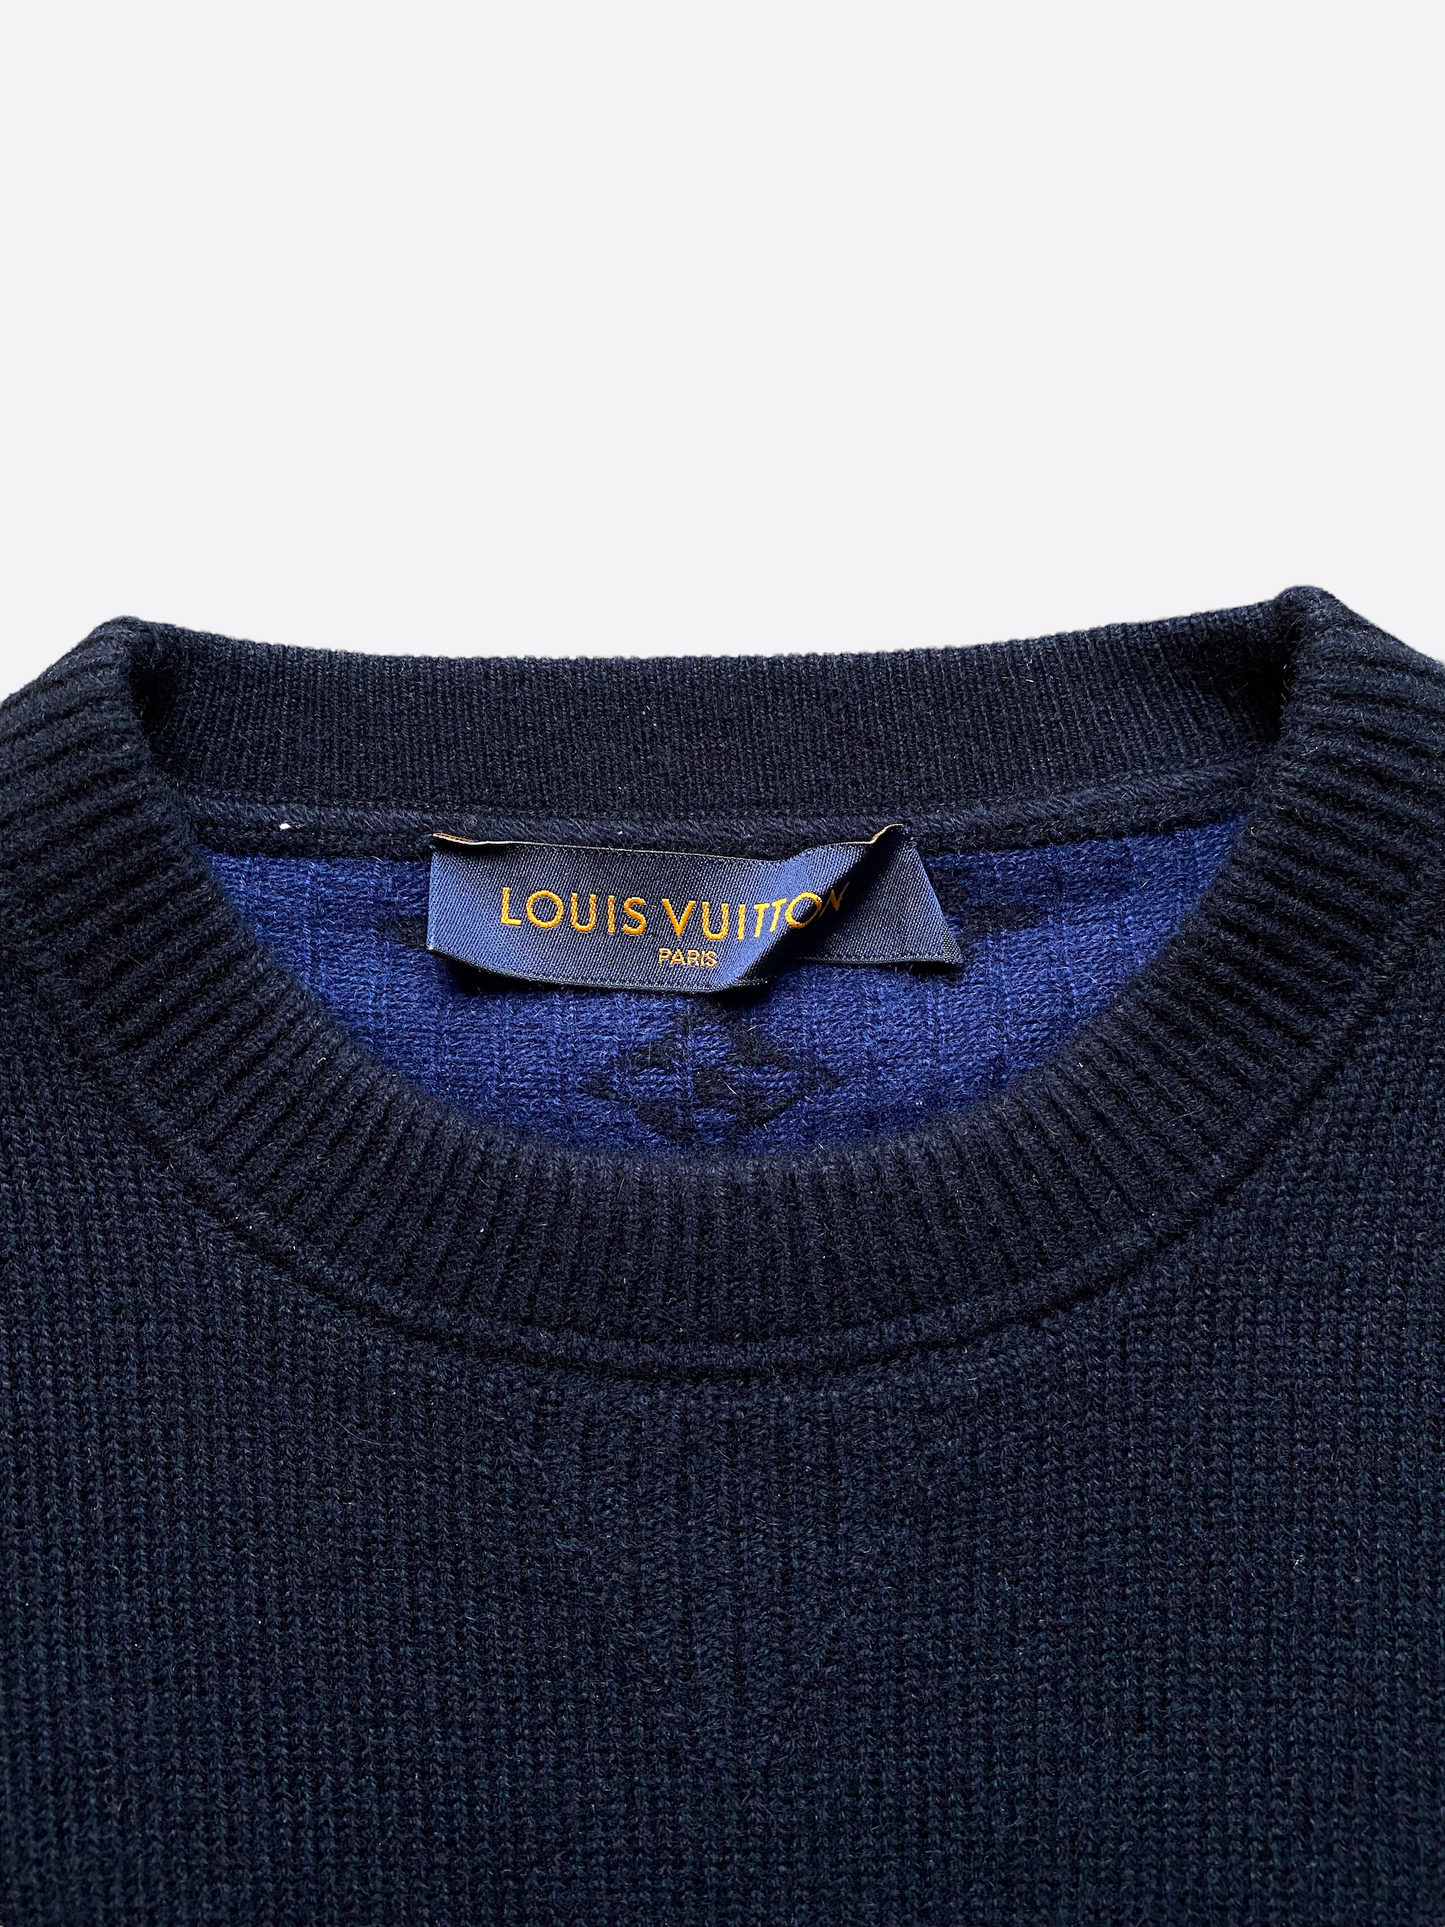 LOUIS VUITTON LOUIS VUITTON knitwear sweater cashmere Red Black